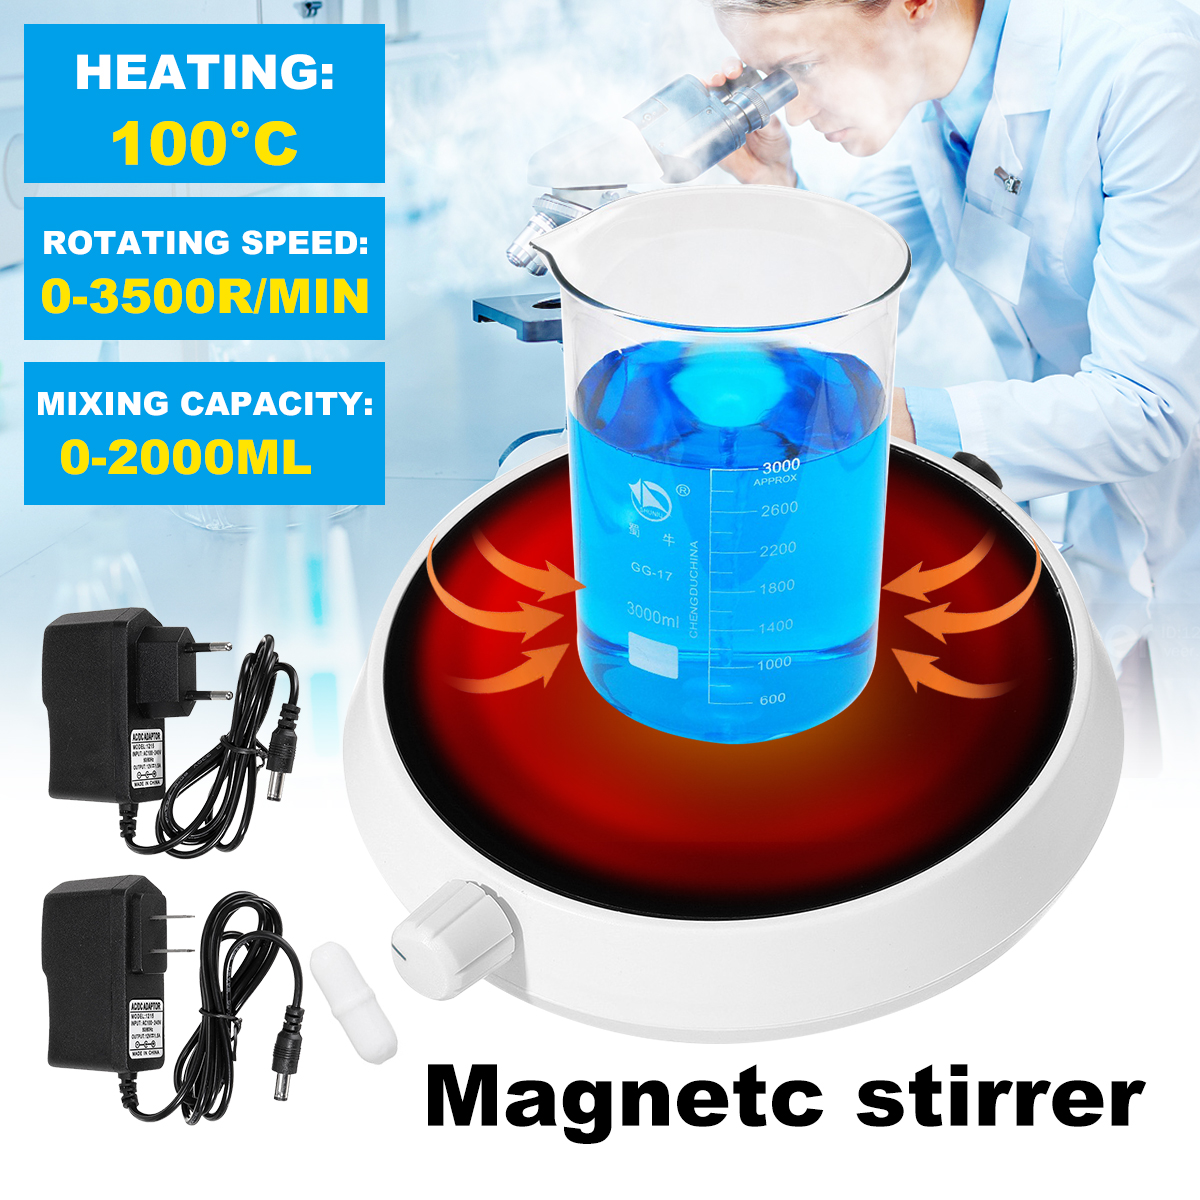 03500Rmin-2000ml-Lab-Magnetic-Hotplate-Stirrer-Heating-Stirrer-Scientific-Experiment-Equipment-1897415-1